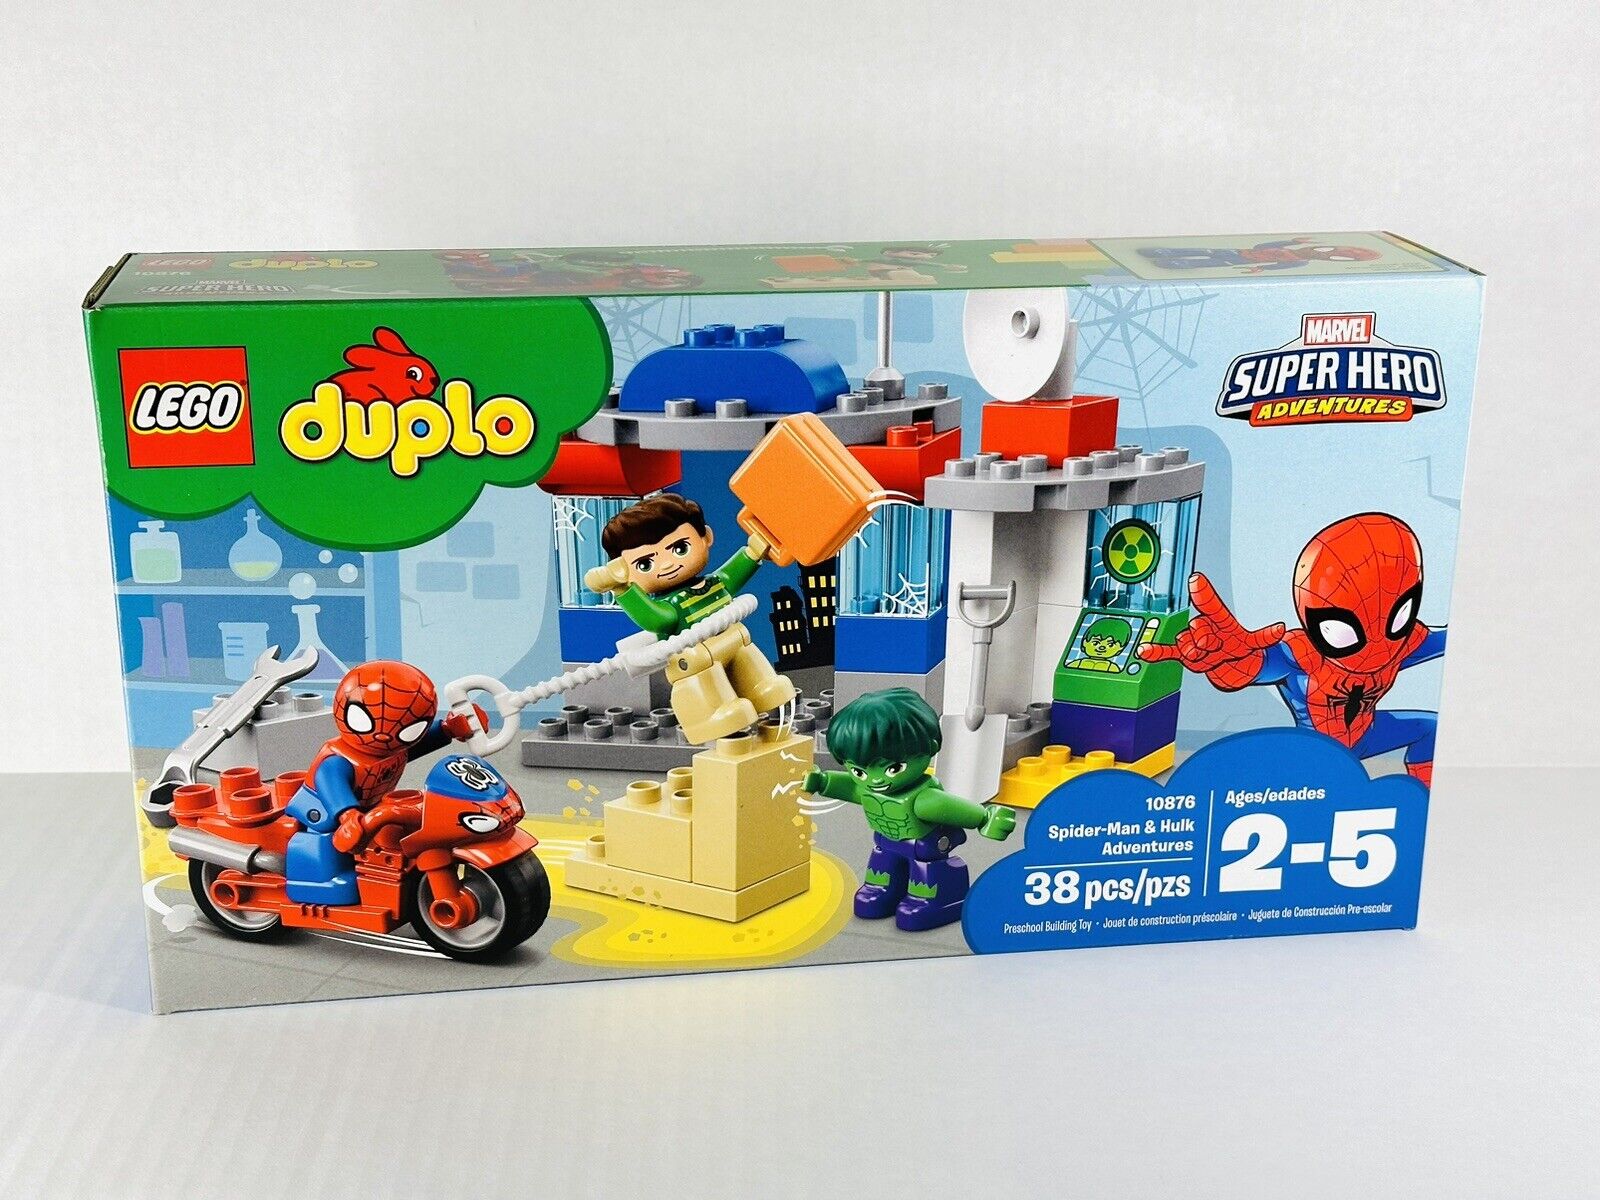 Marvel Super Heroes Duplo Lego - 10876 Spider-Man & Hulk Adventures Sealed